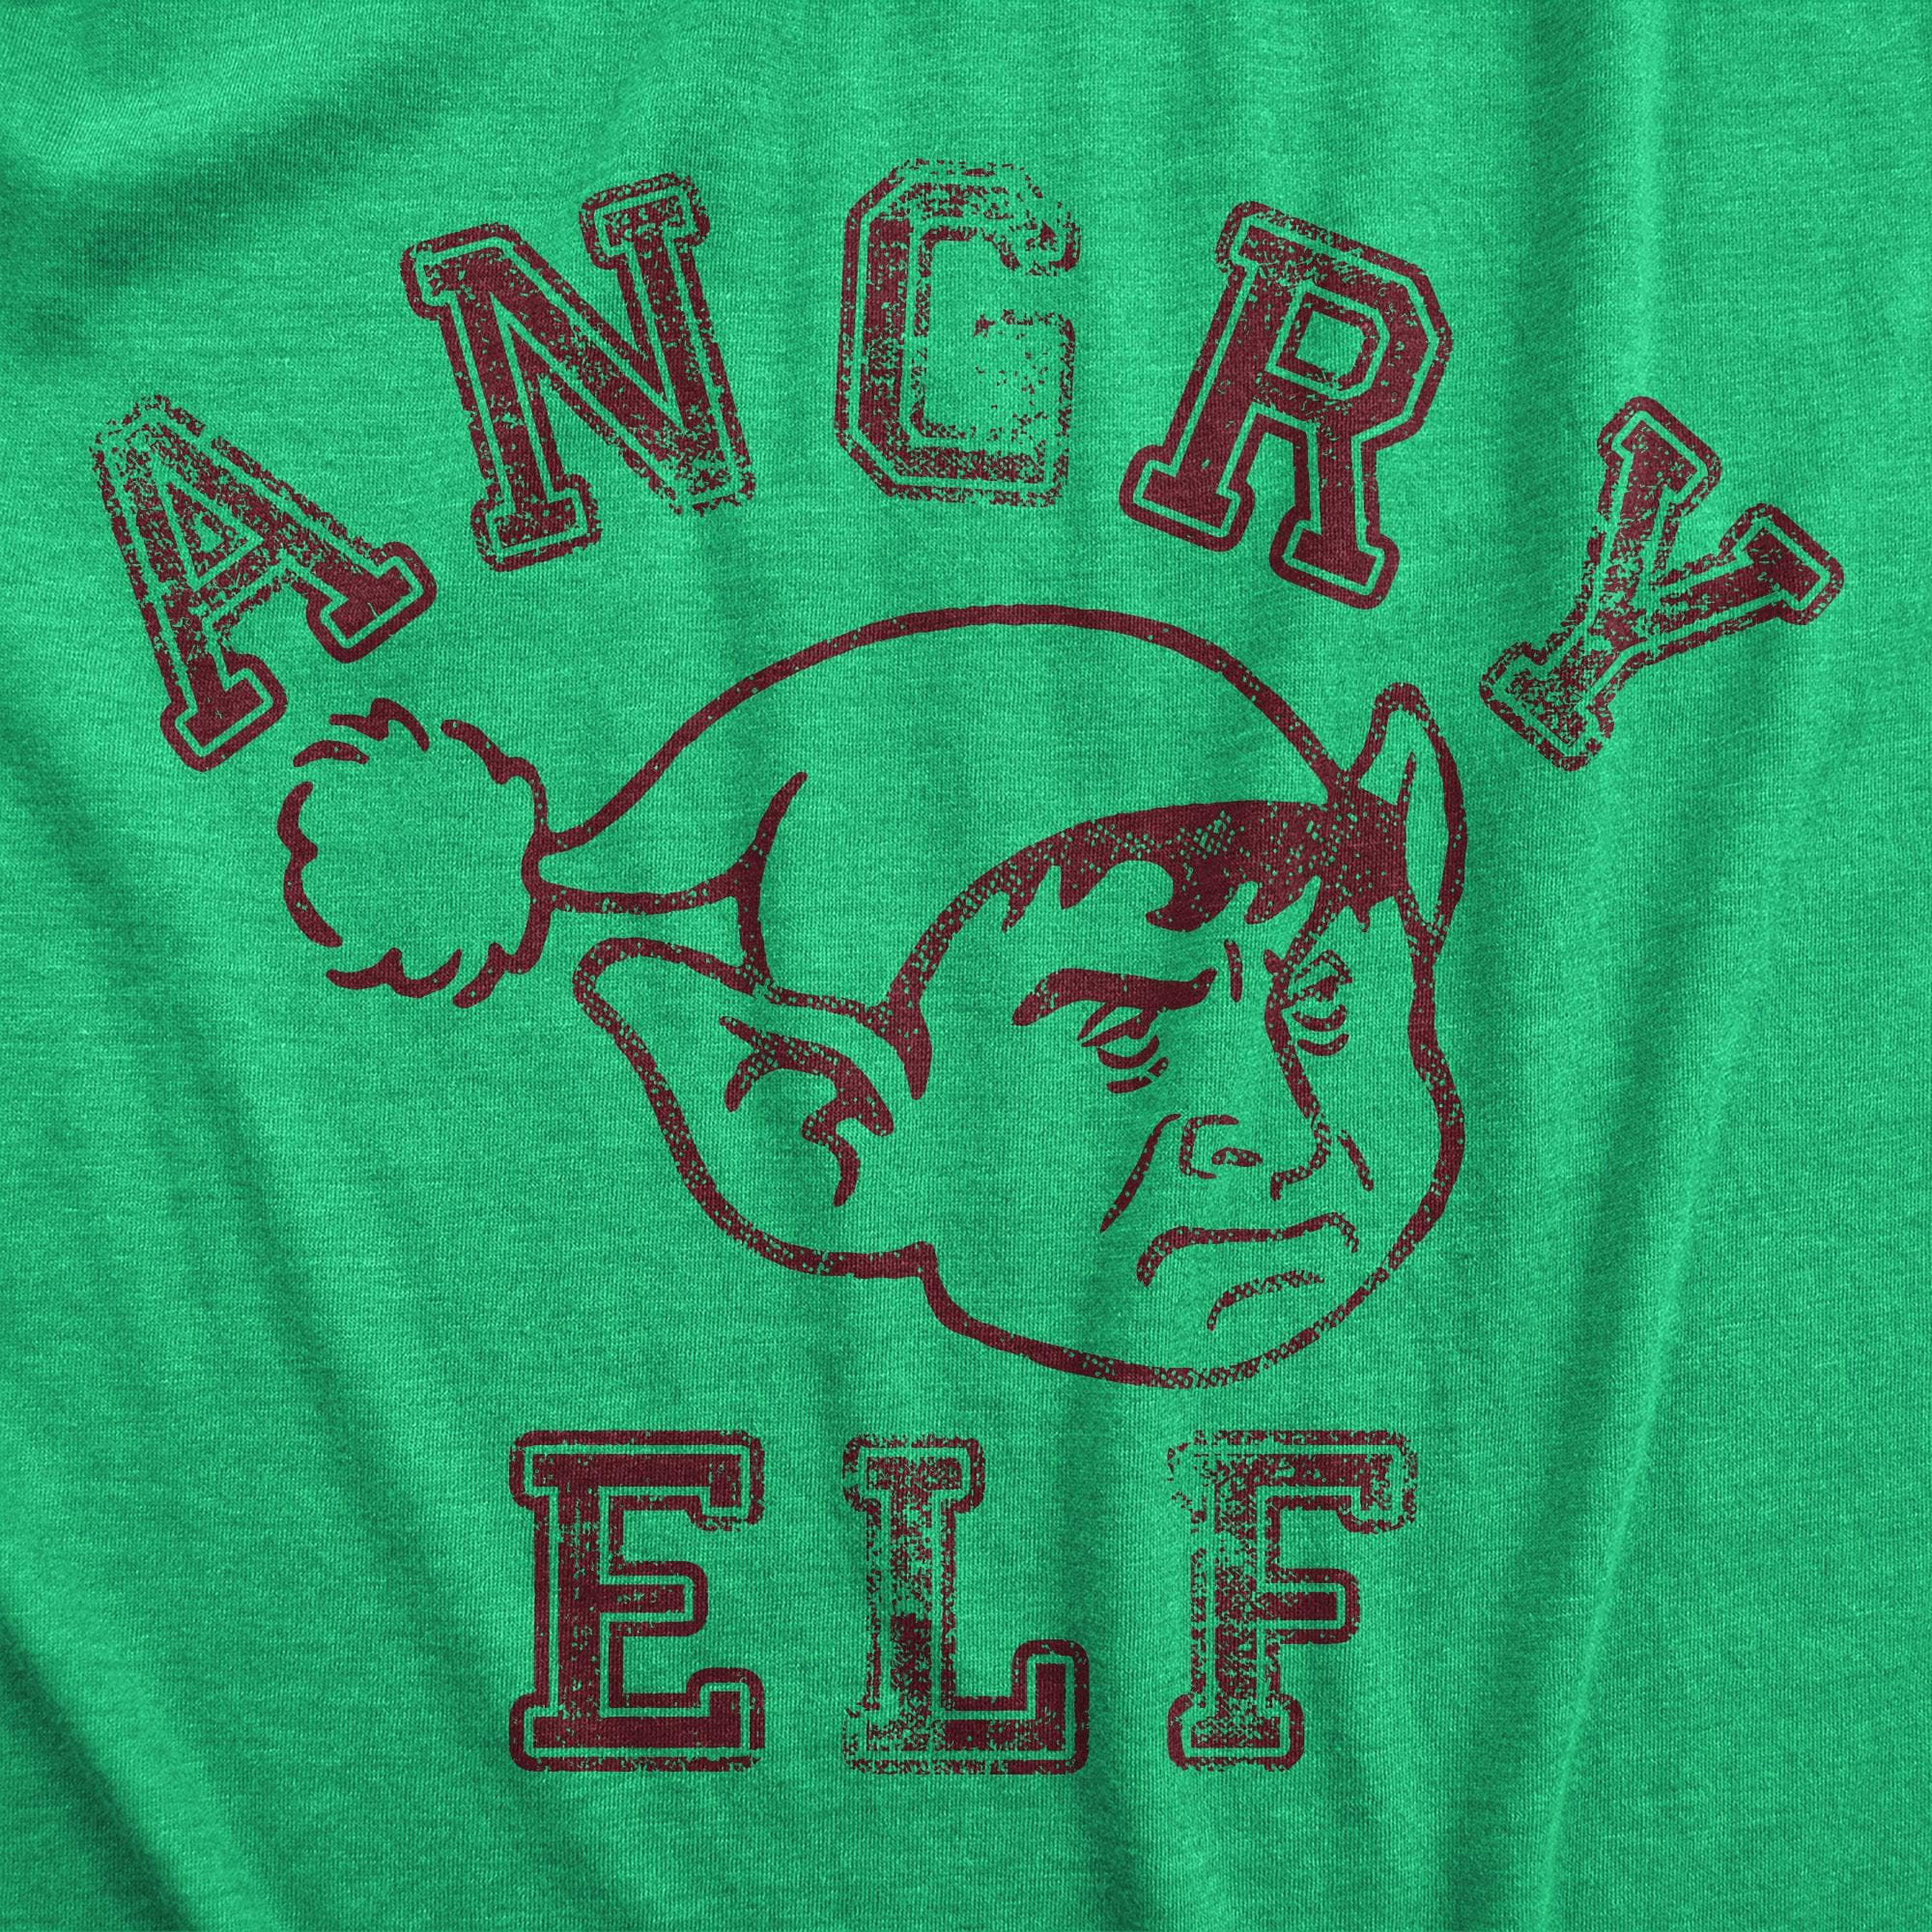 Angry Elf Men's Tshirt  -  Crazy Dog T-Shirts